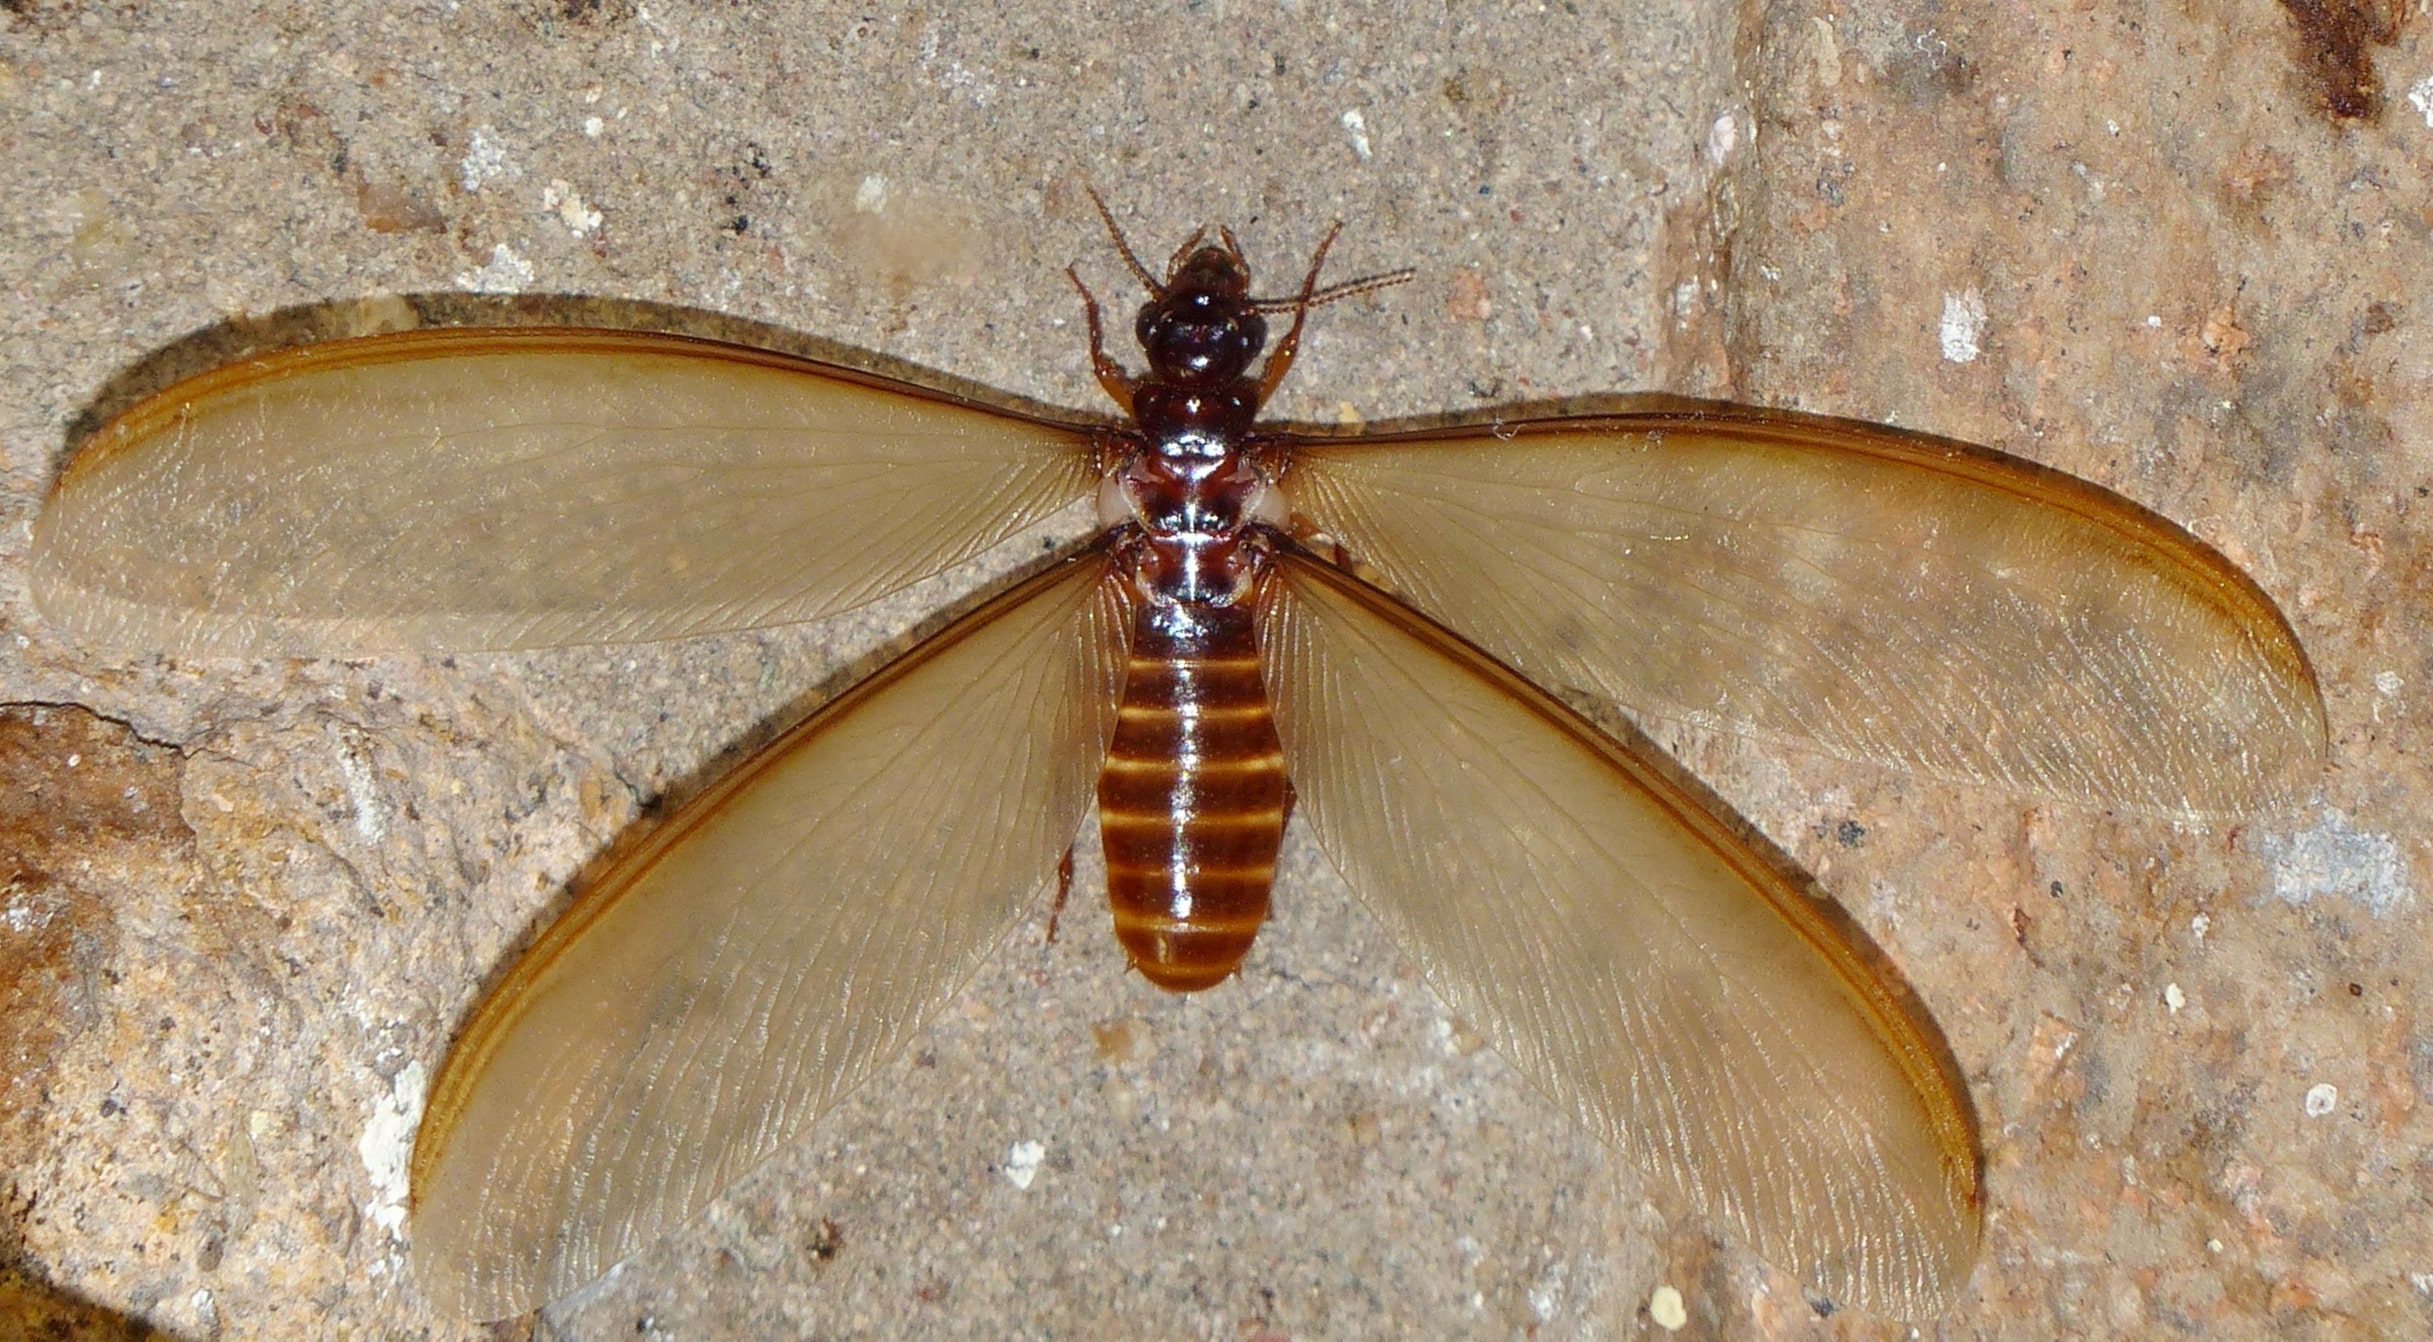 Winged termite